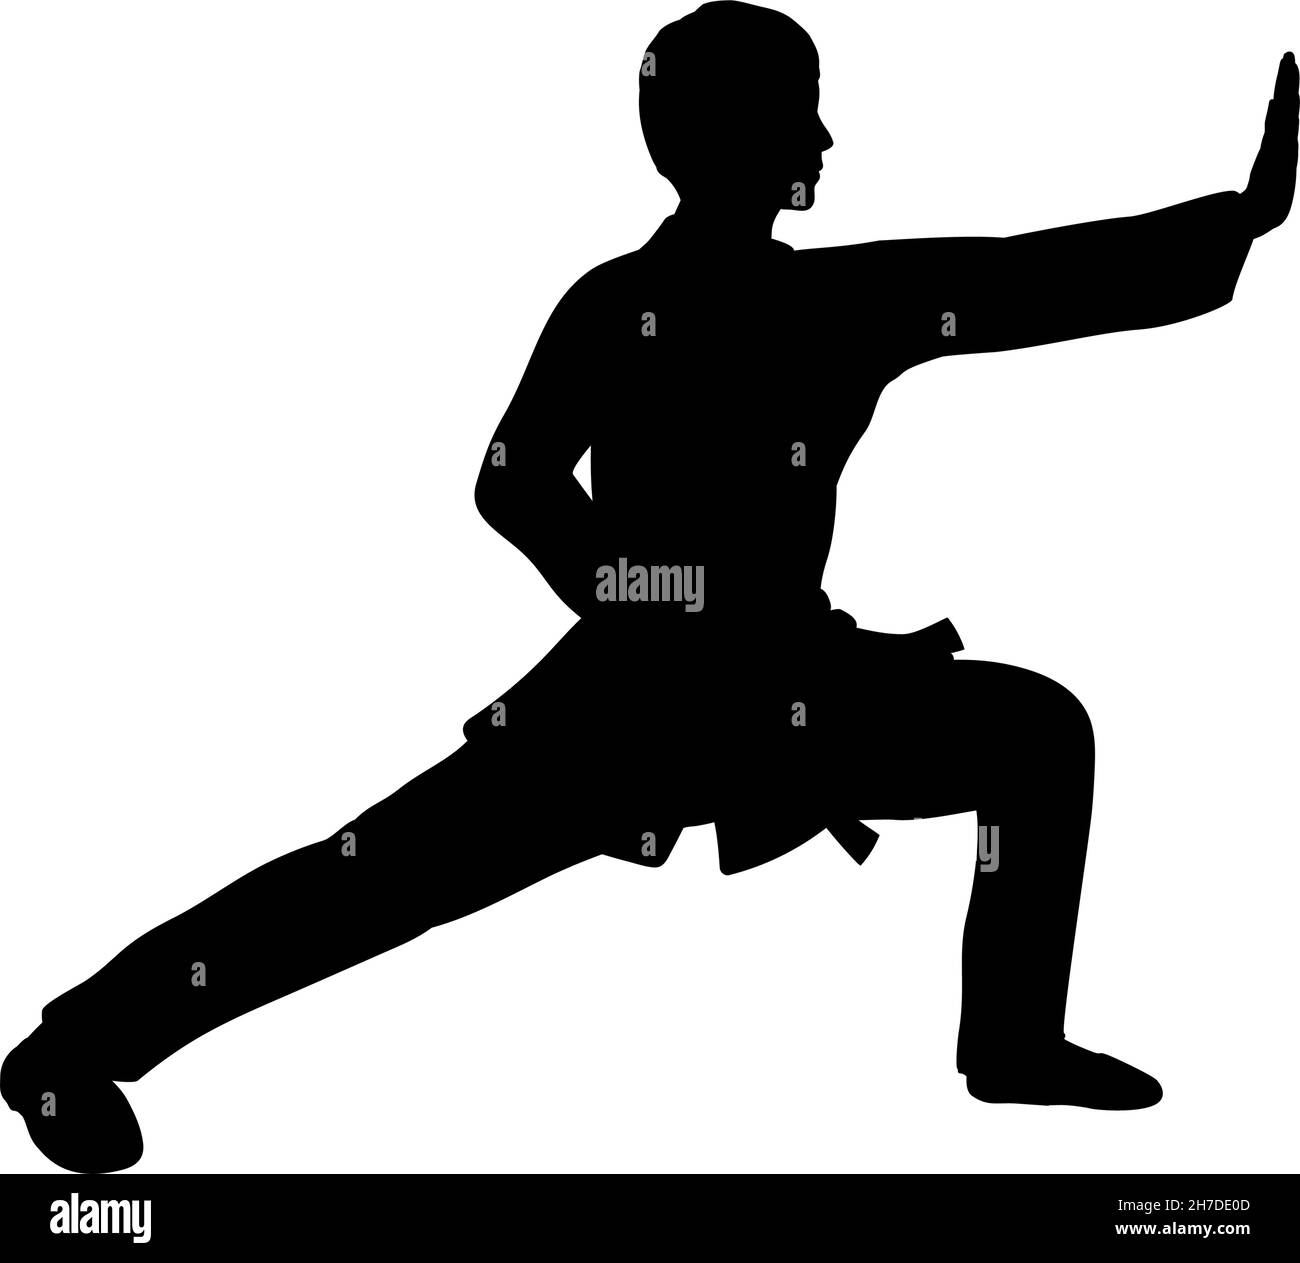 Silhouette of man train martial arts archer pose. Stock Vector